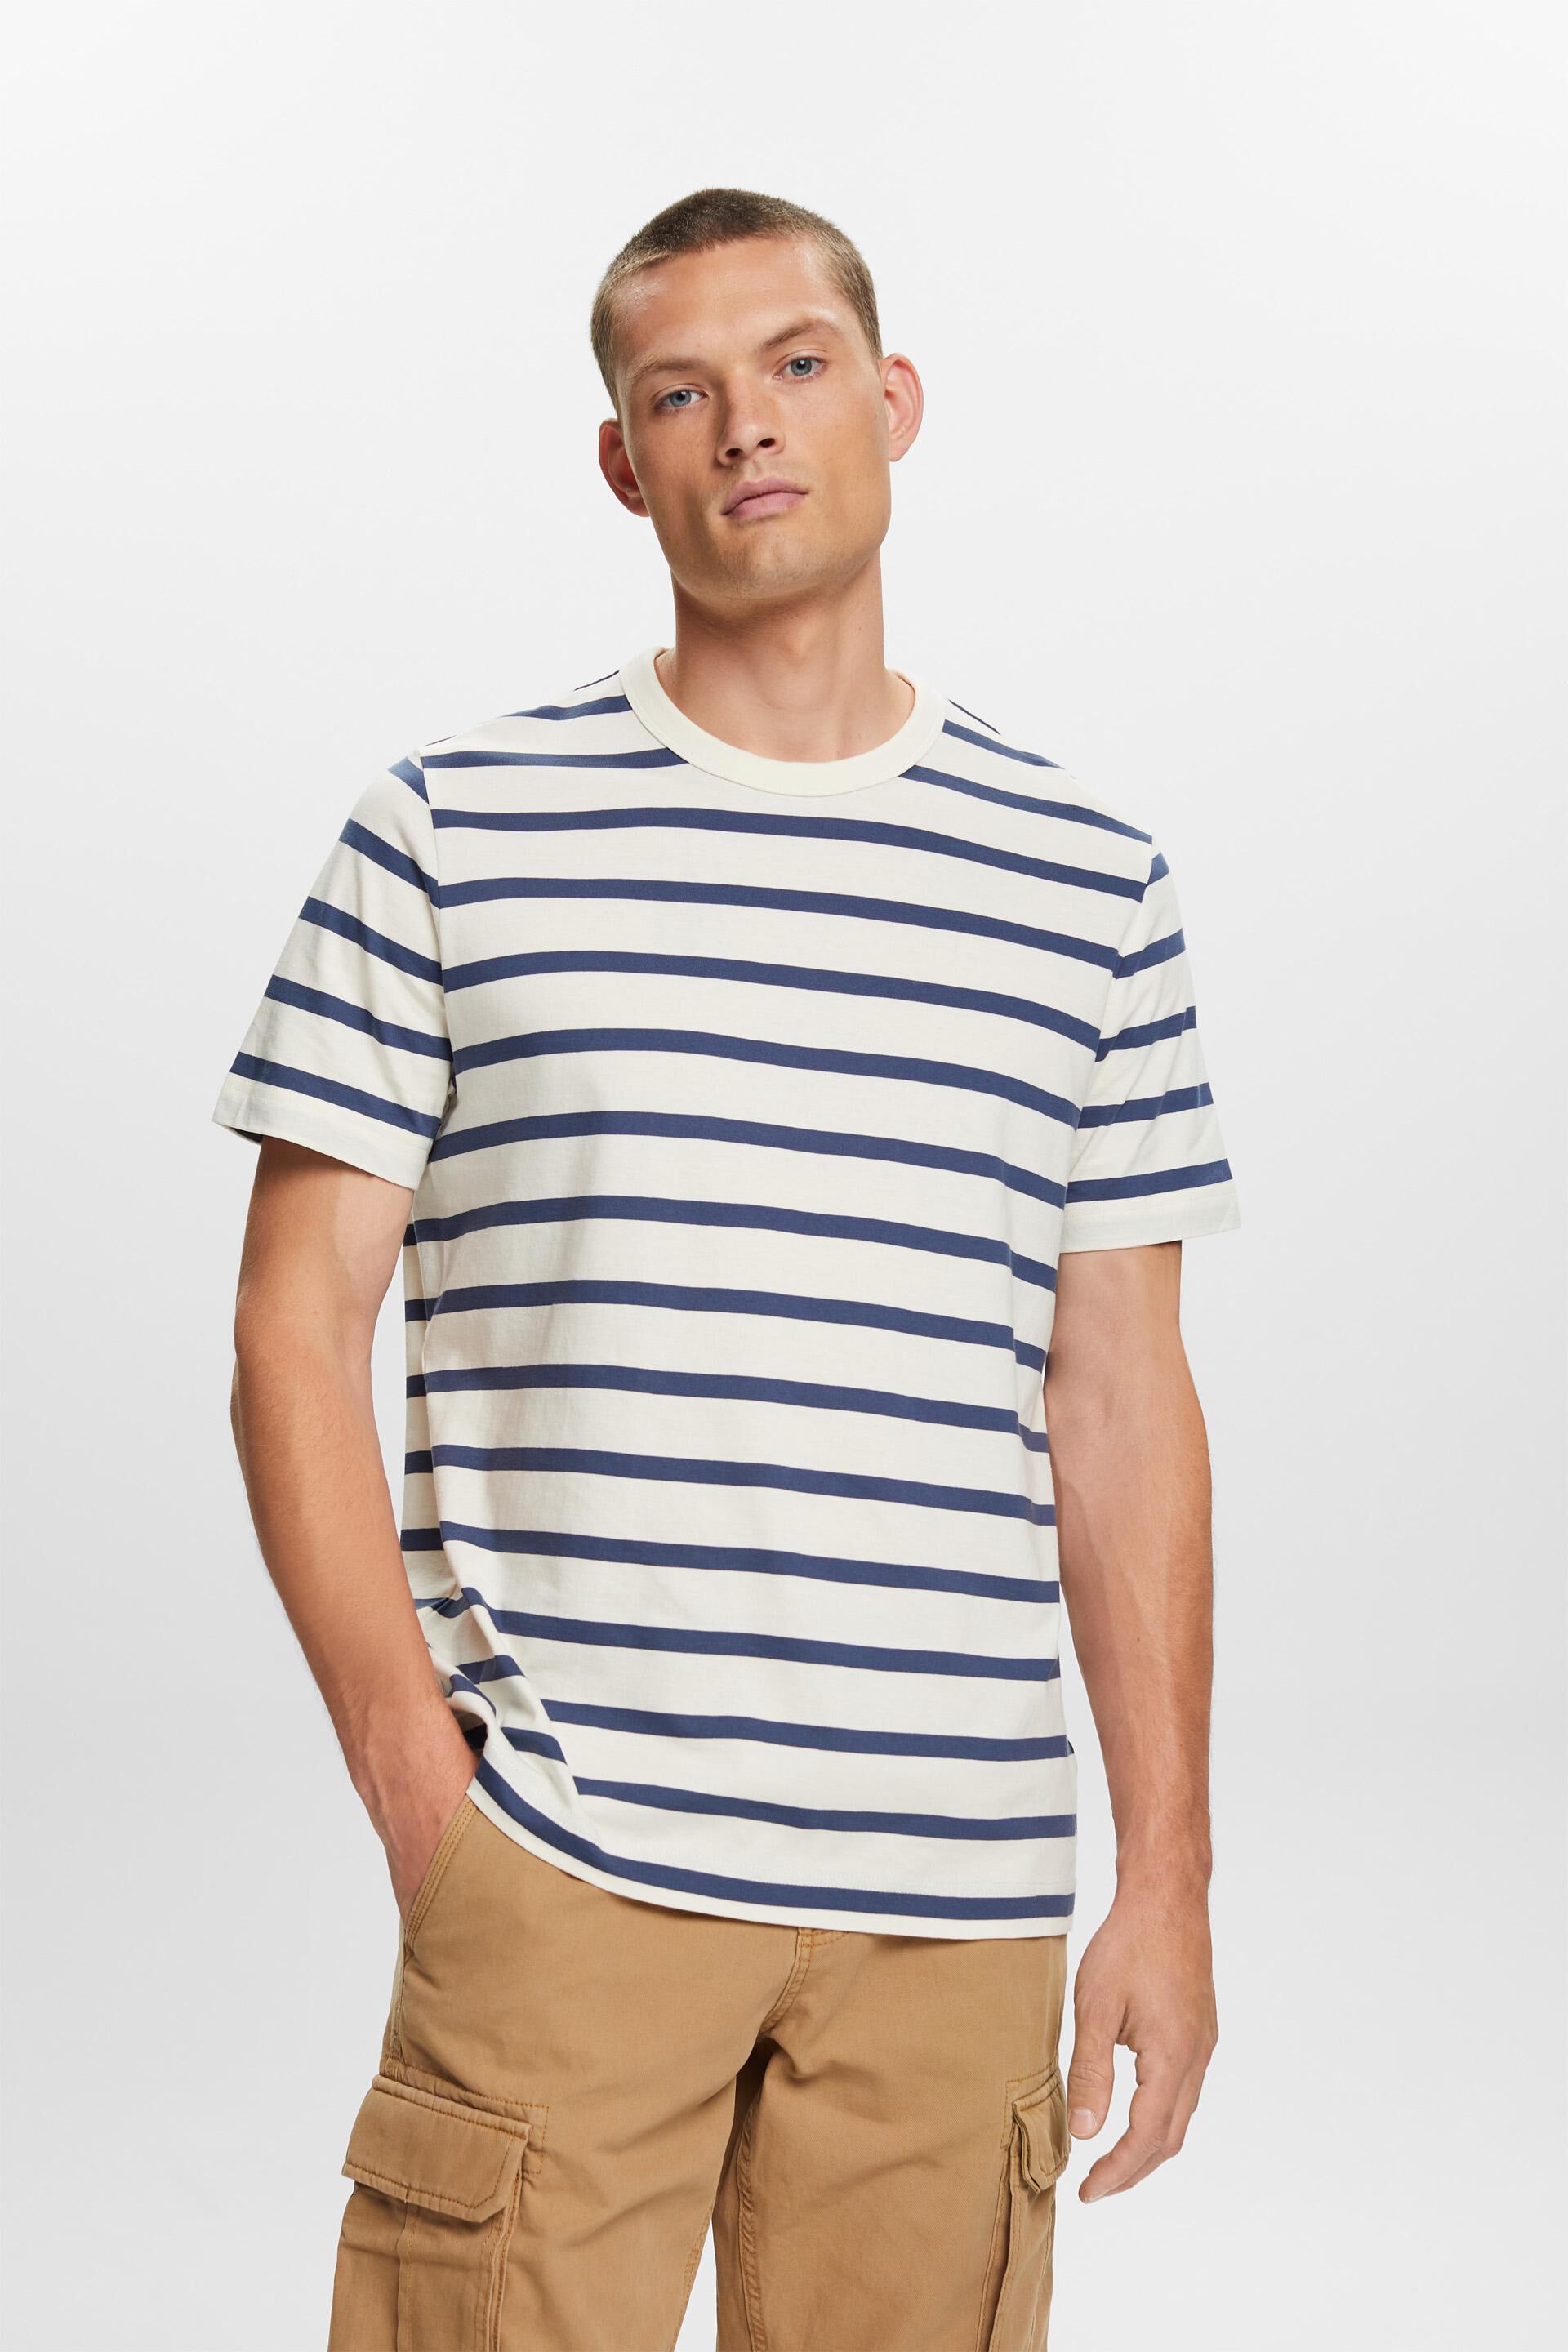 Esprit jersey cotton t-shirt, Striped 100%